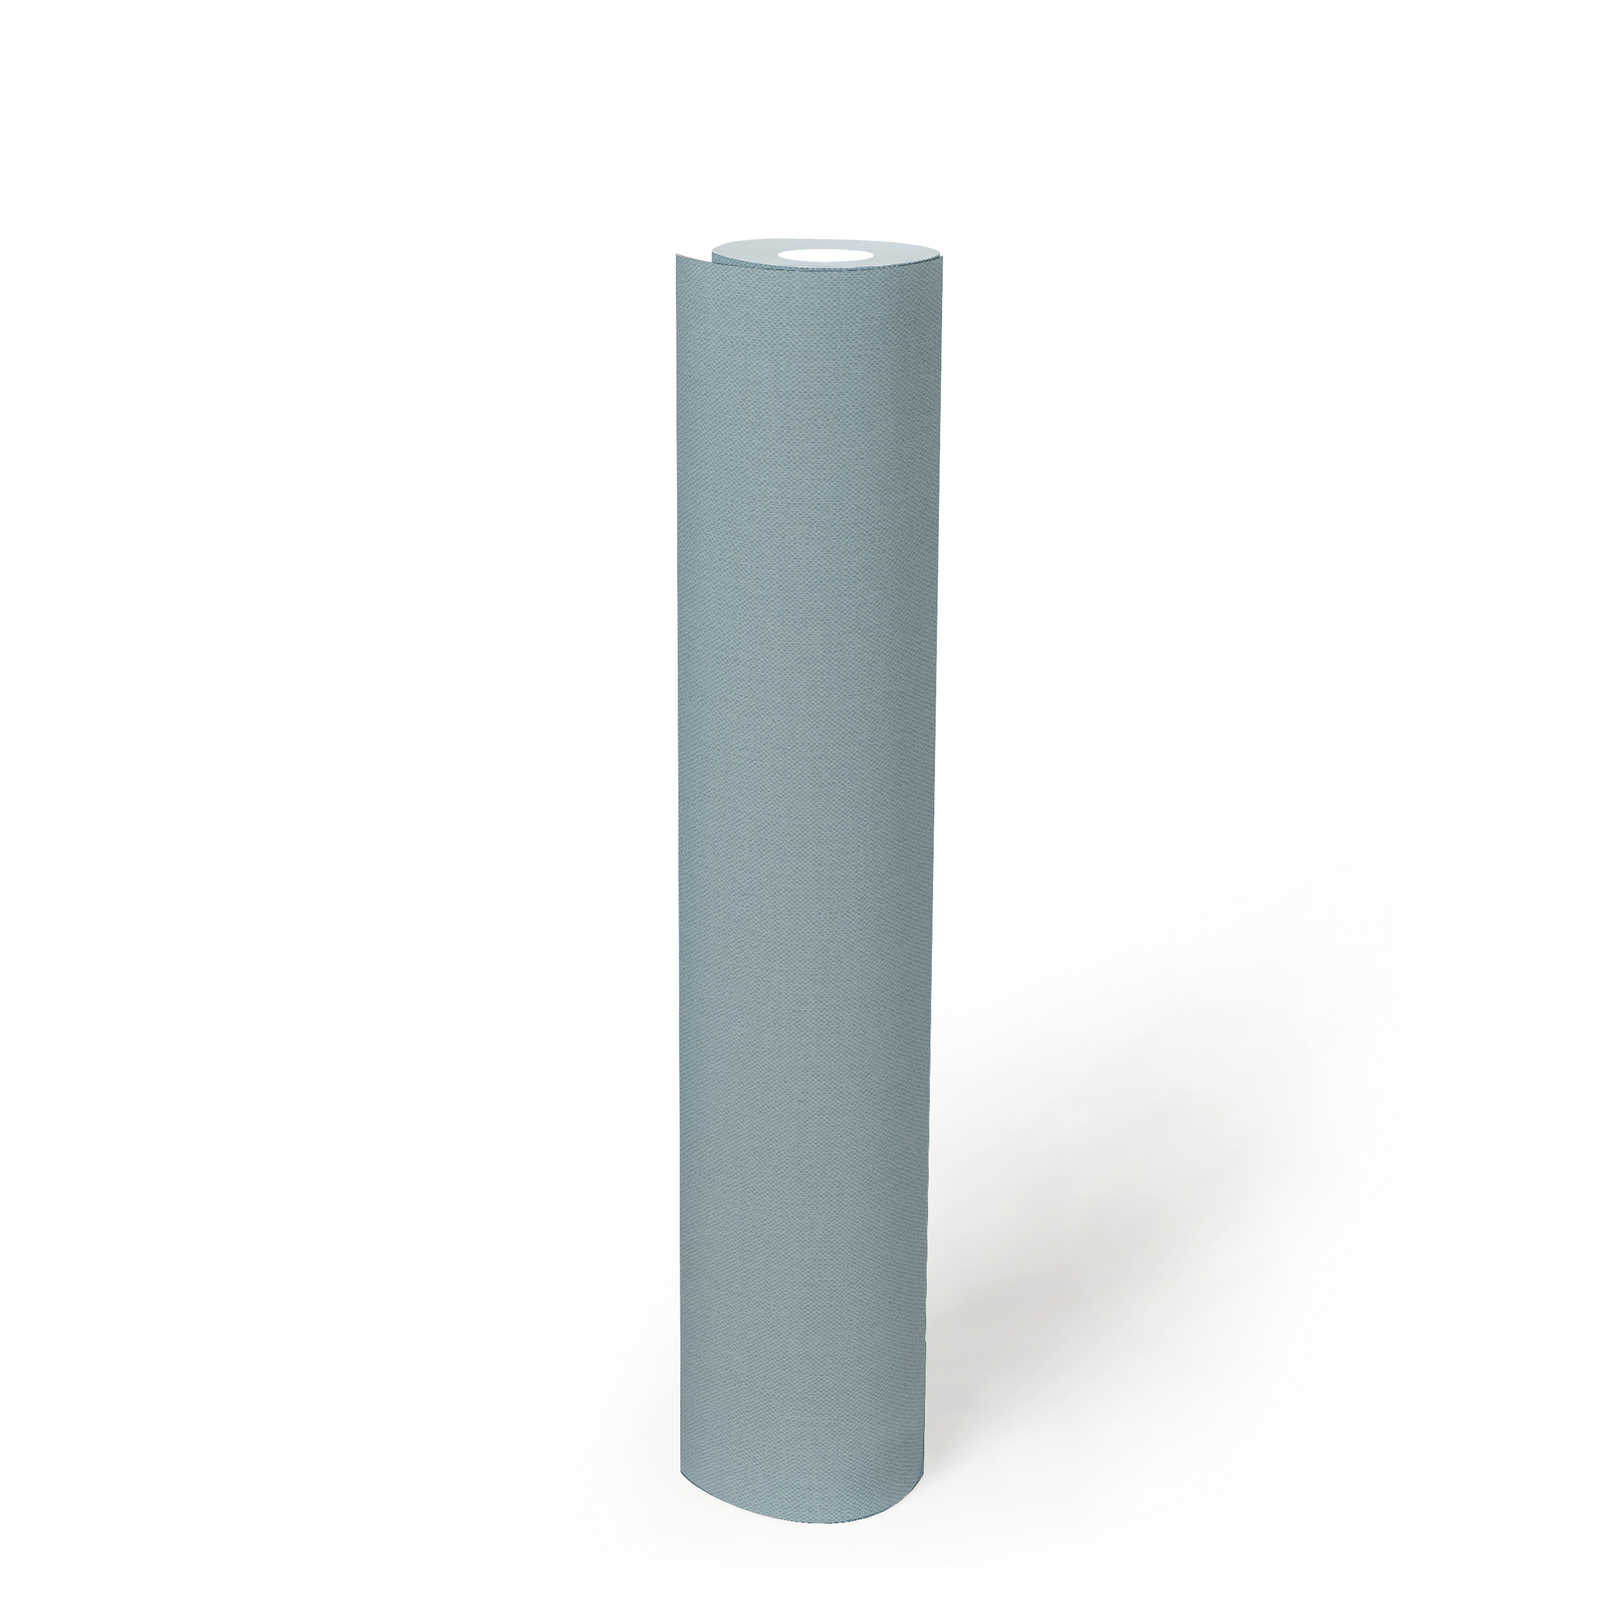             Wallpaper blue grey with fabric texture & matte colour - blue
        